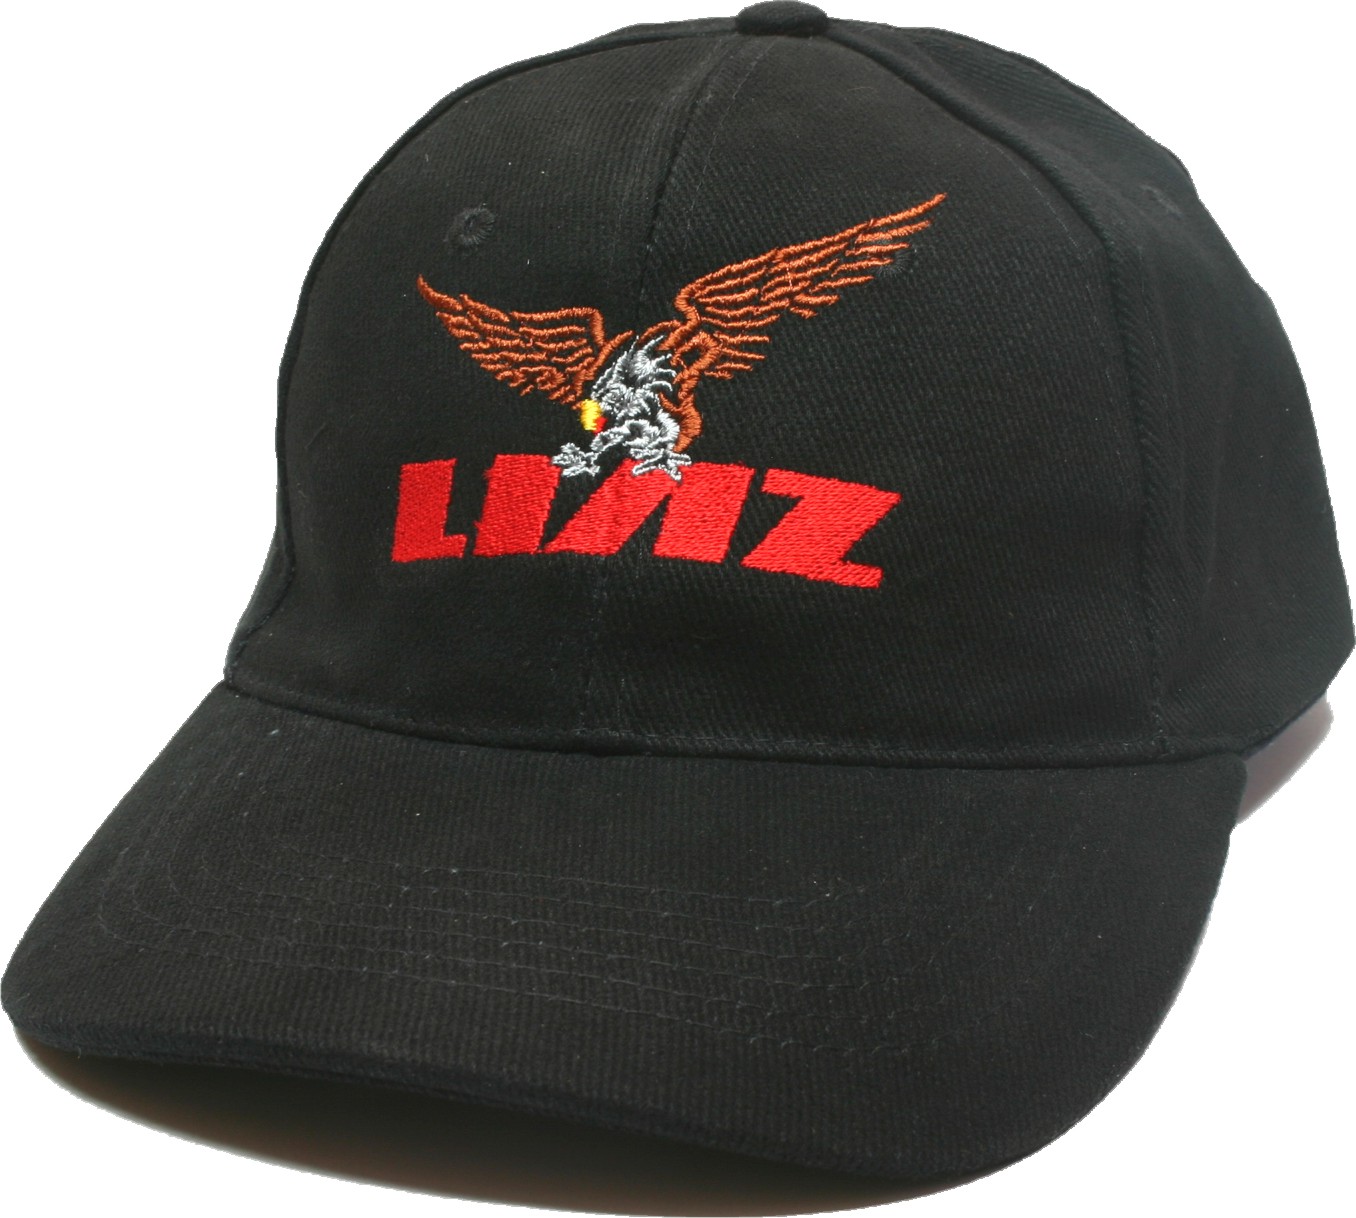 Truck čepice LIAZ Eagle